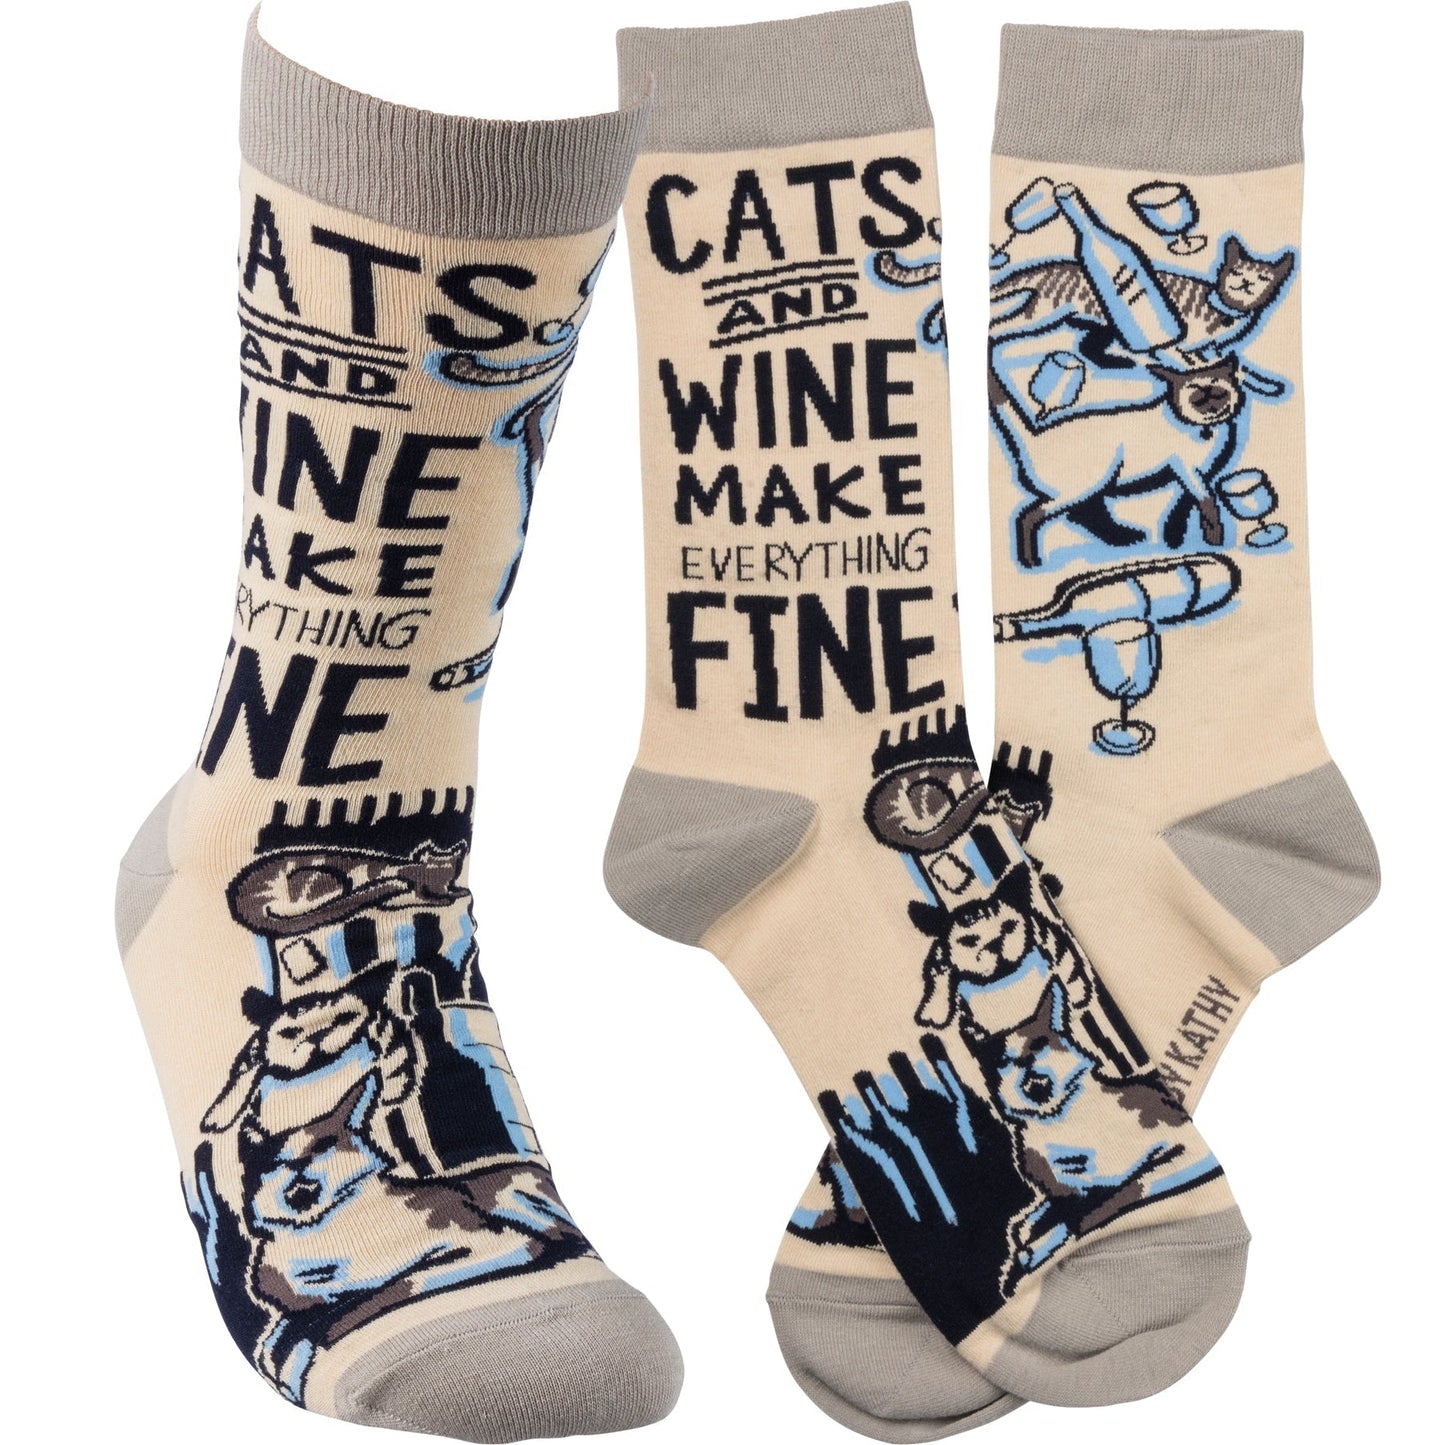 Cats And Wine Make Everything Fine Socks Funny Novelty Socks